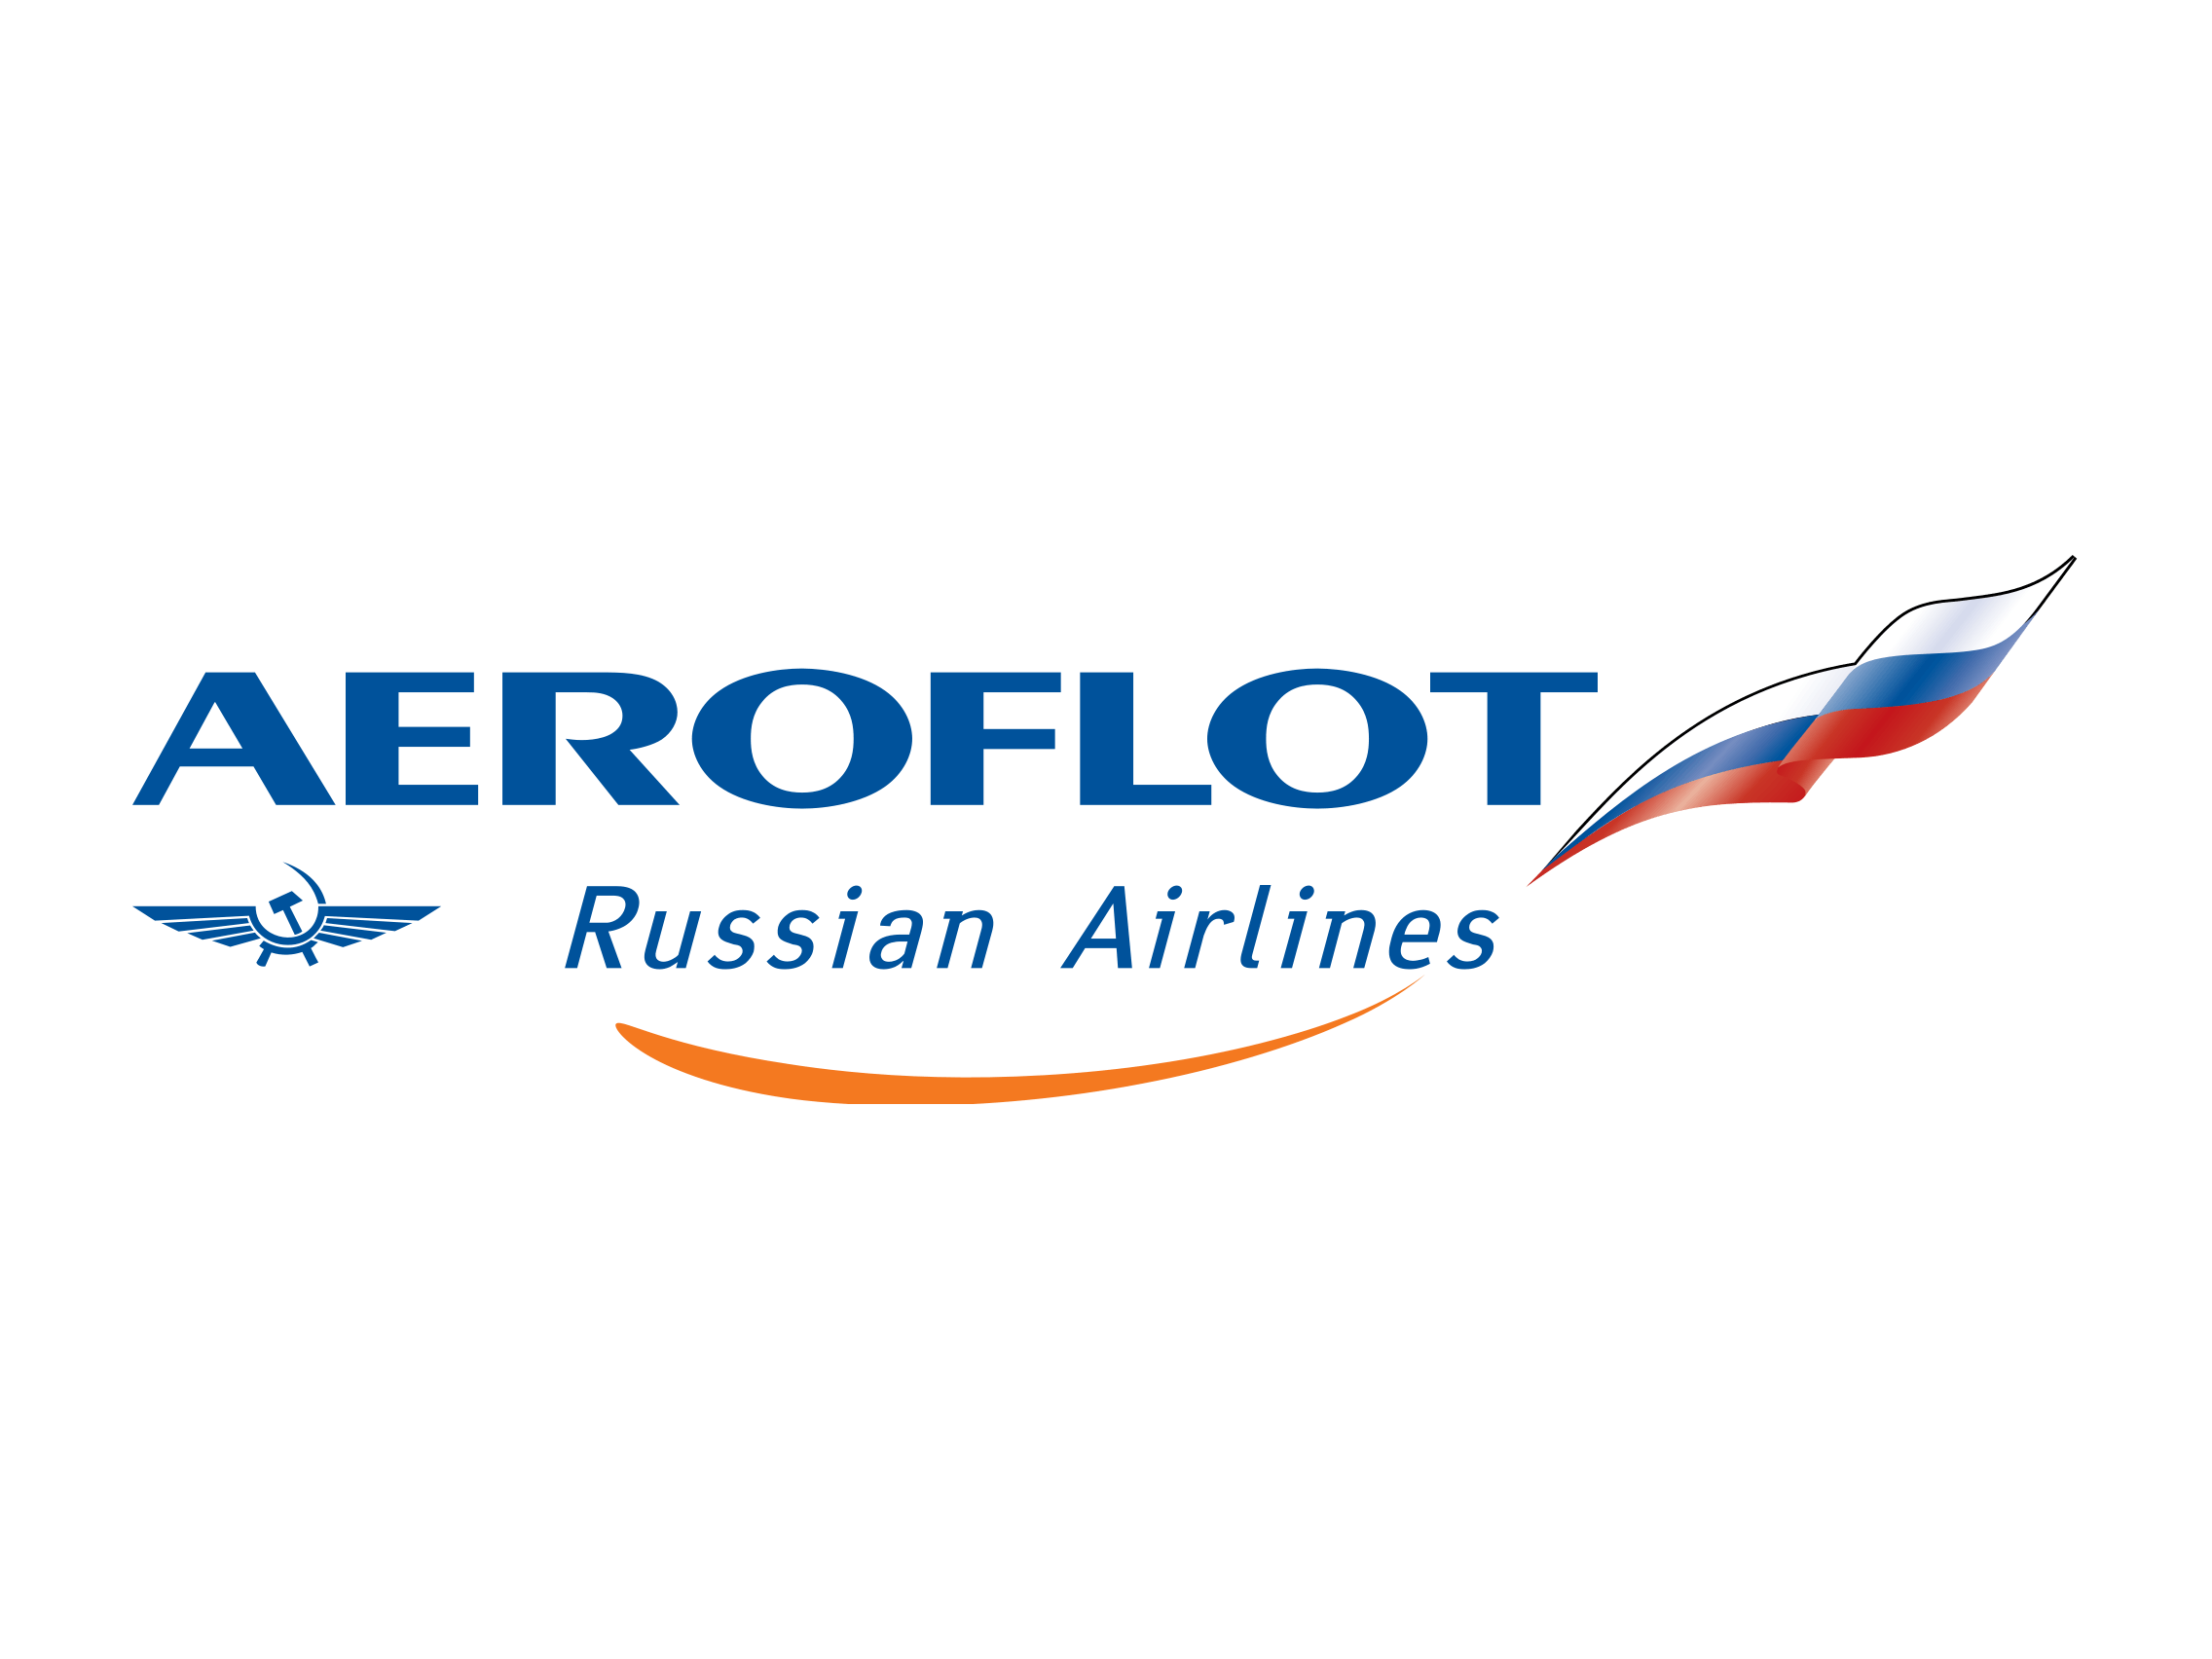 Russia Airline Logo - Aeroflot Russian Airlines Logo